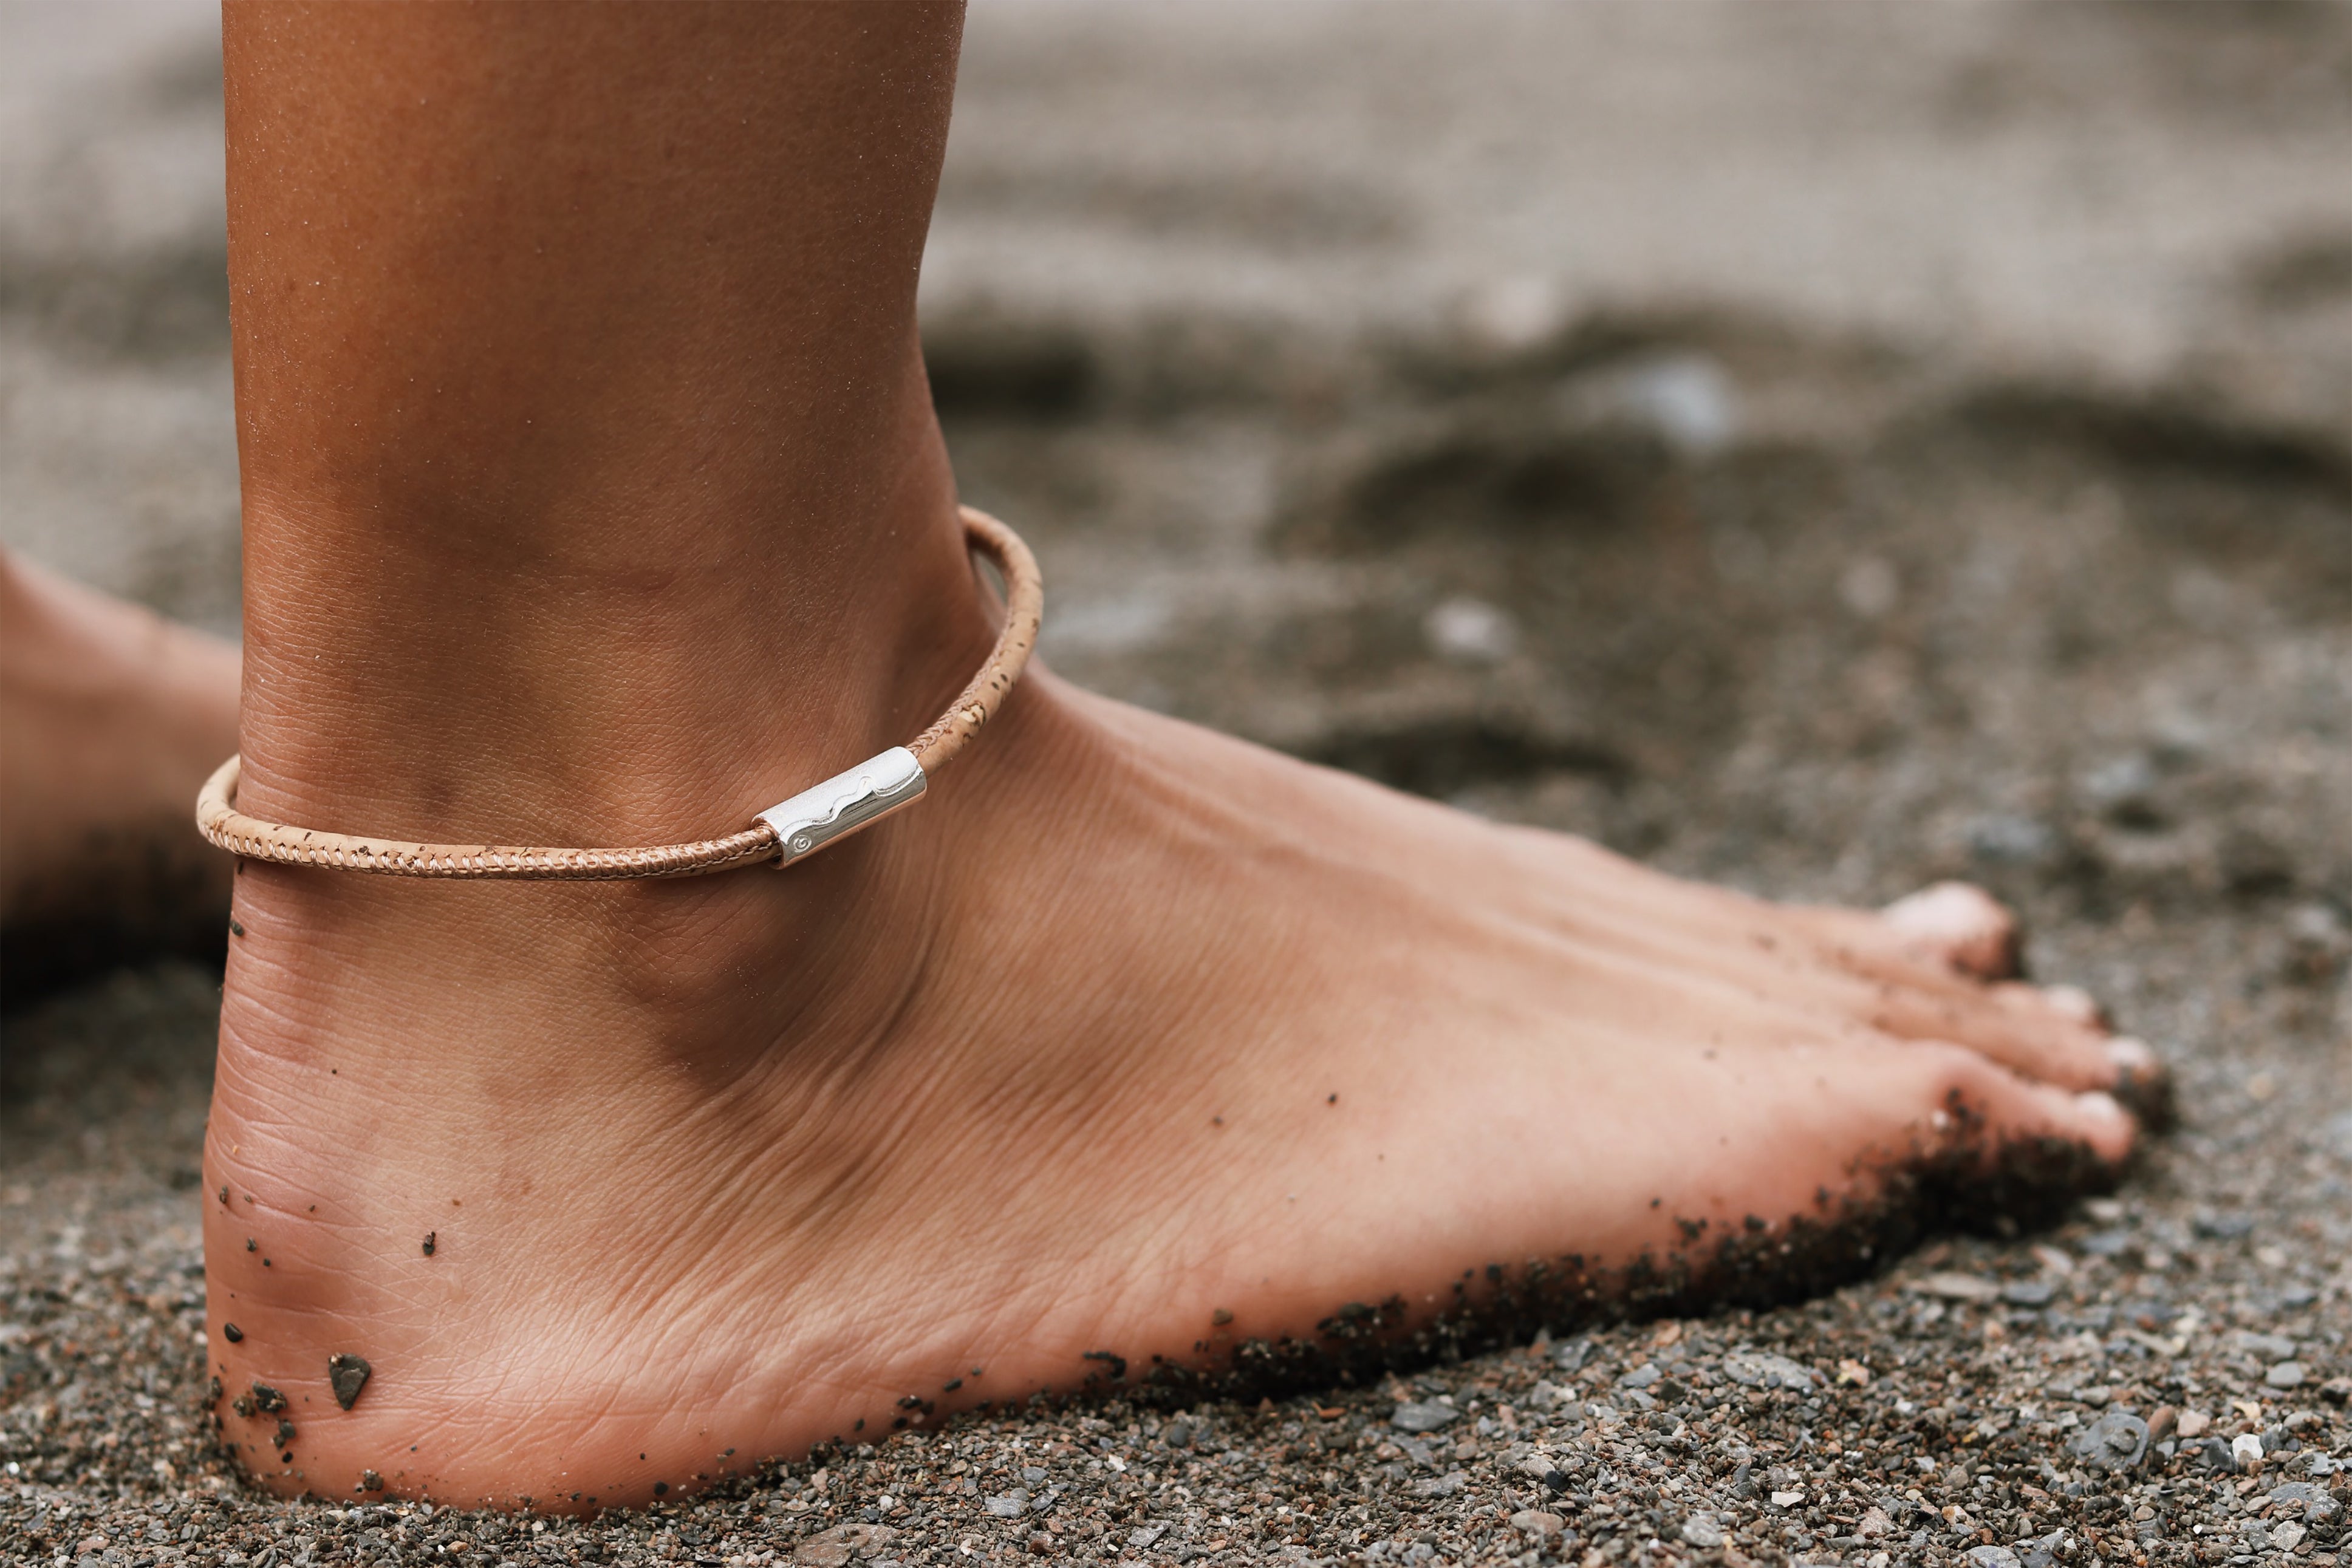 Silver tube coastline bead worn on natural cork anklet.